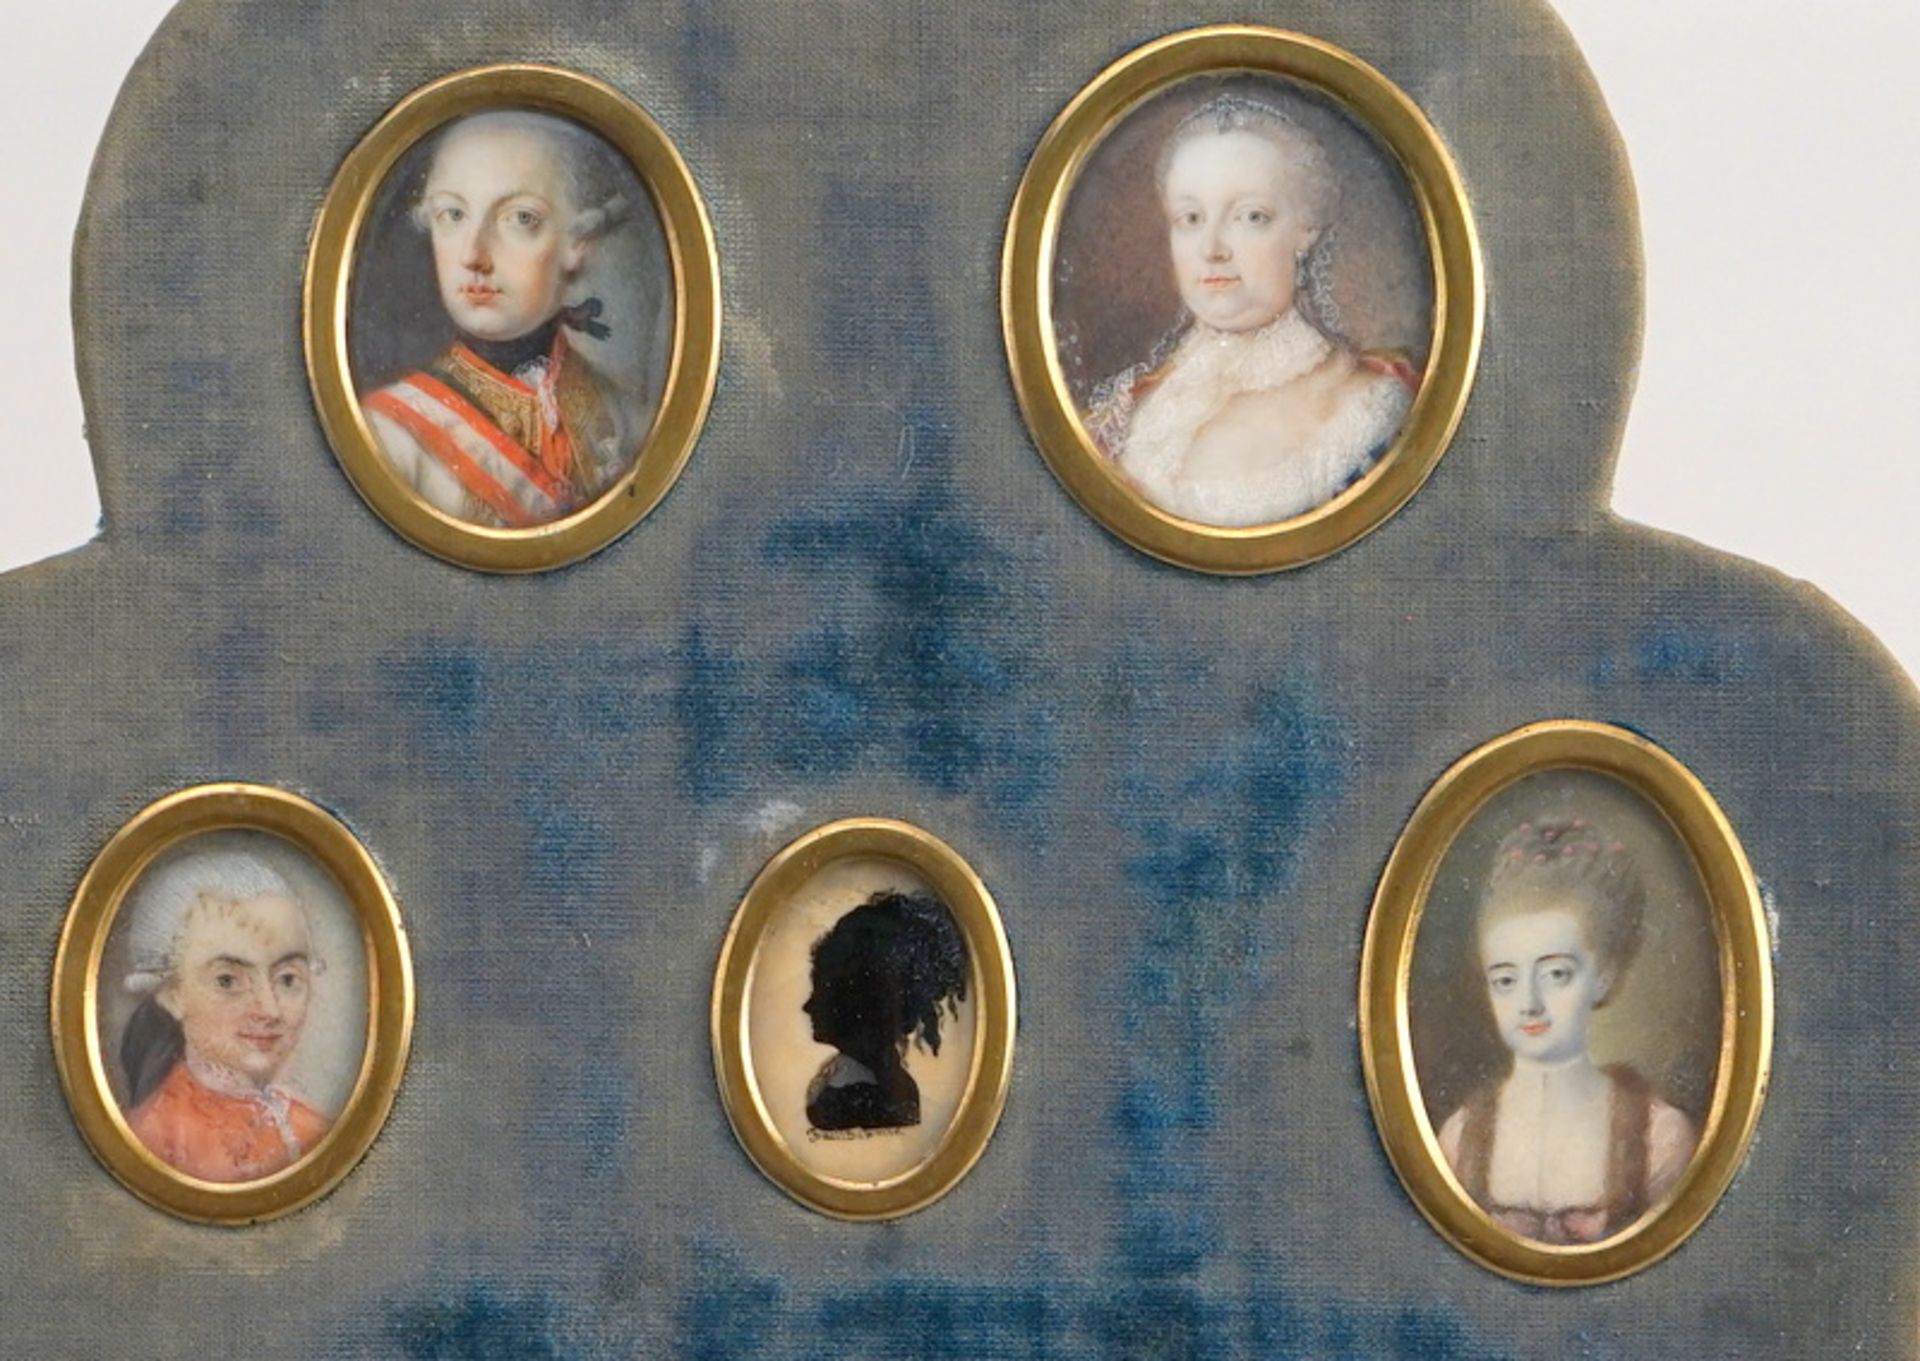 Schmidt: Sammlung Miniaturen d. 18 JH. Wien Maria Theresia - Sign. Schmidt Fec 1796 - Image 2 of 3